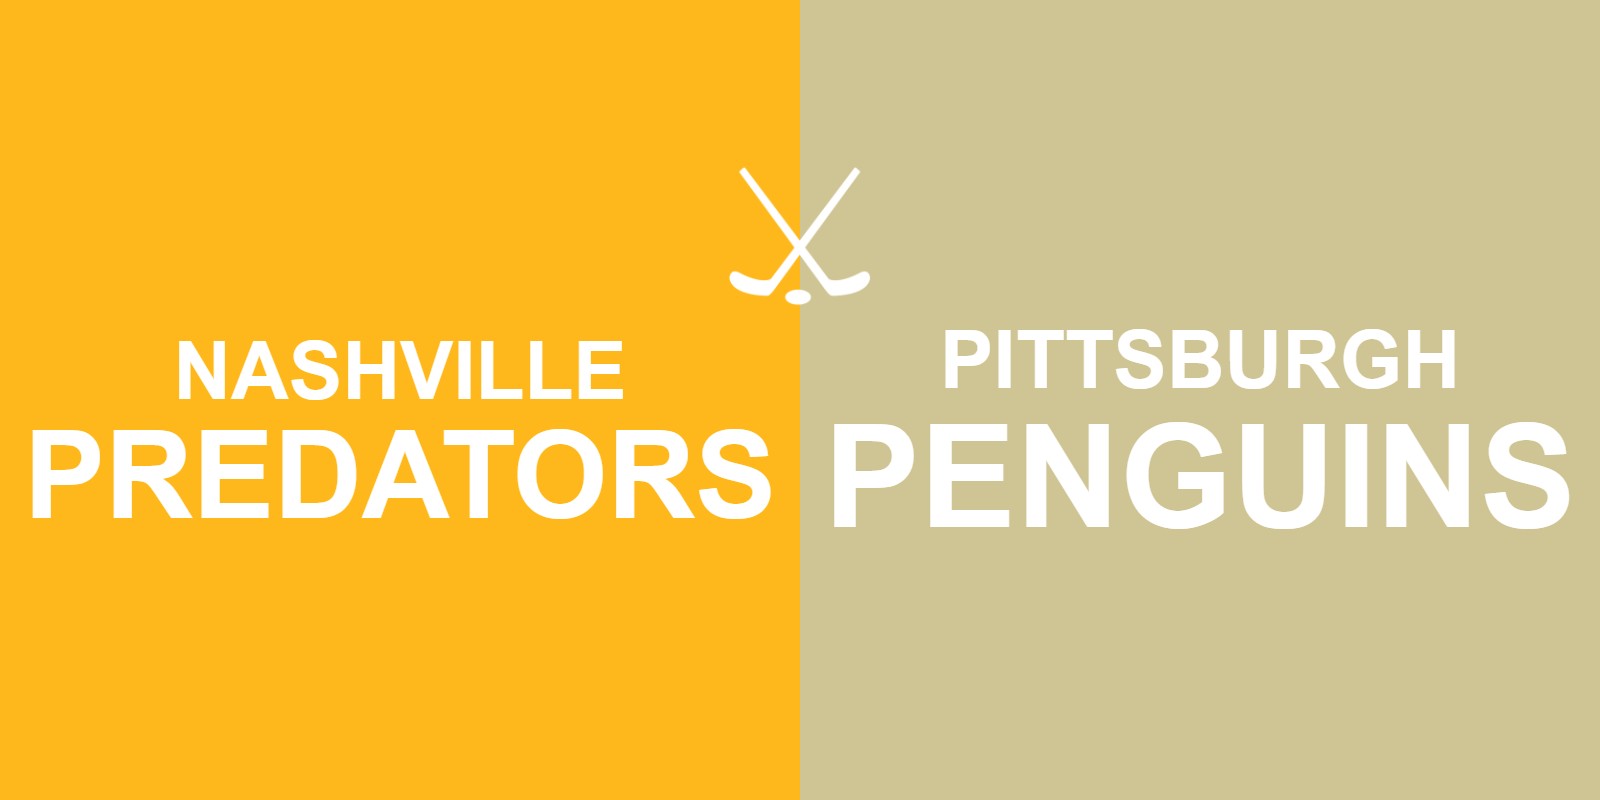 Predators vs Penguins